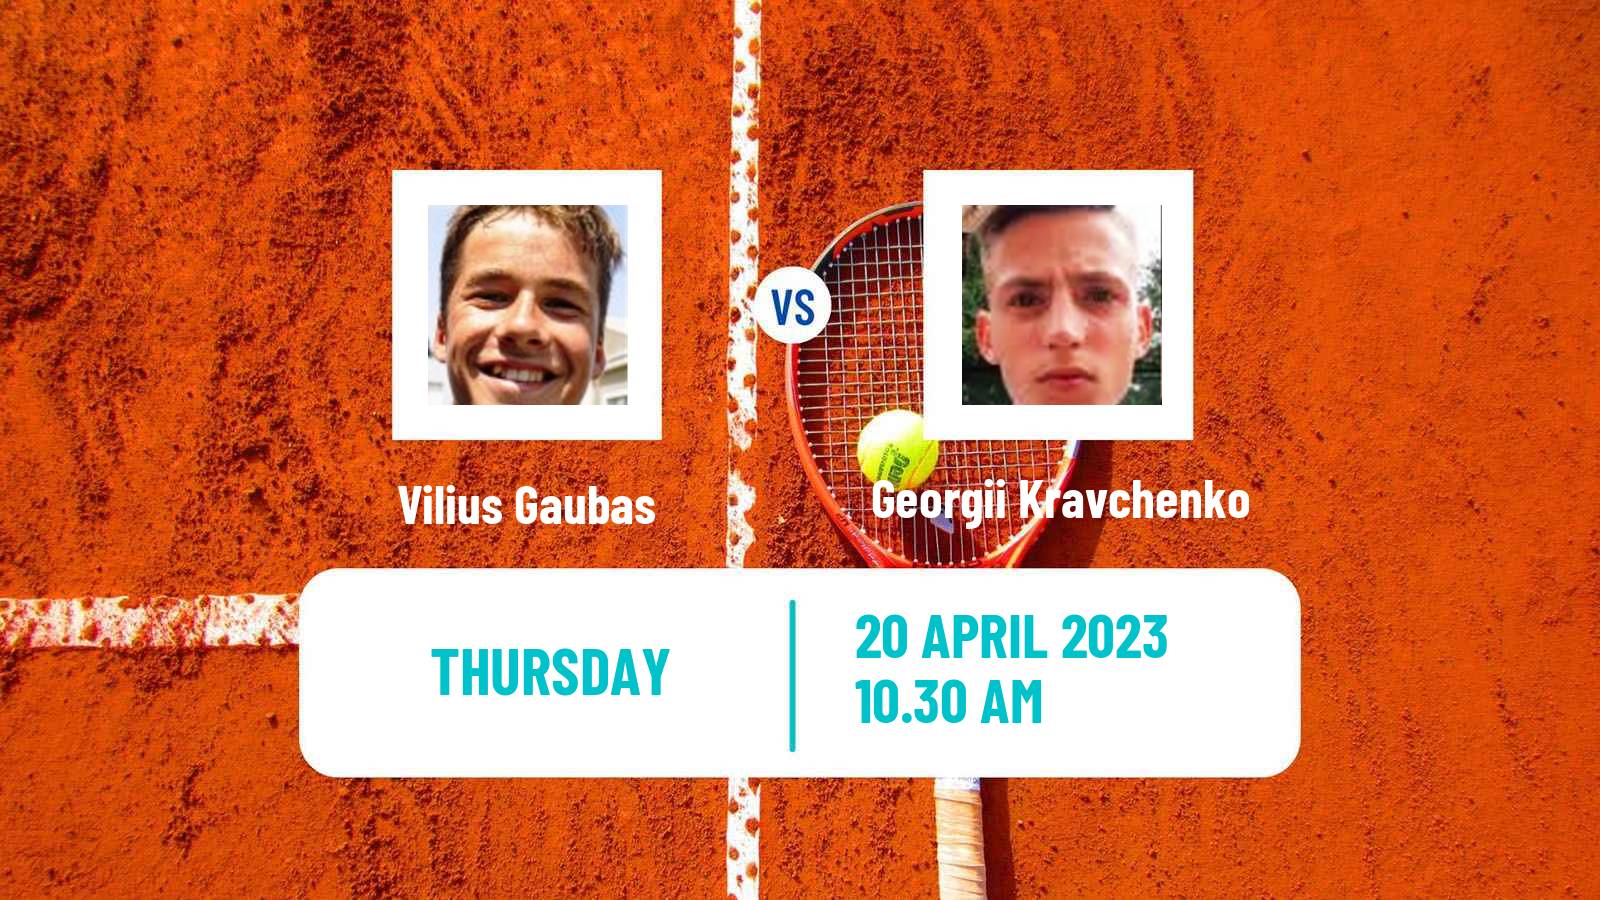 Tennis ITF Tournaments Vilius Gaubas - Georgii Kravchenko